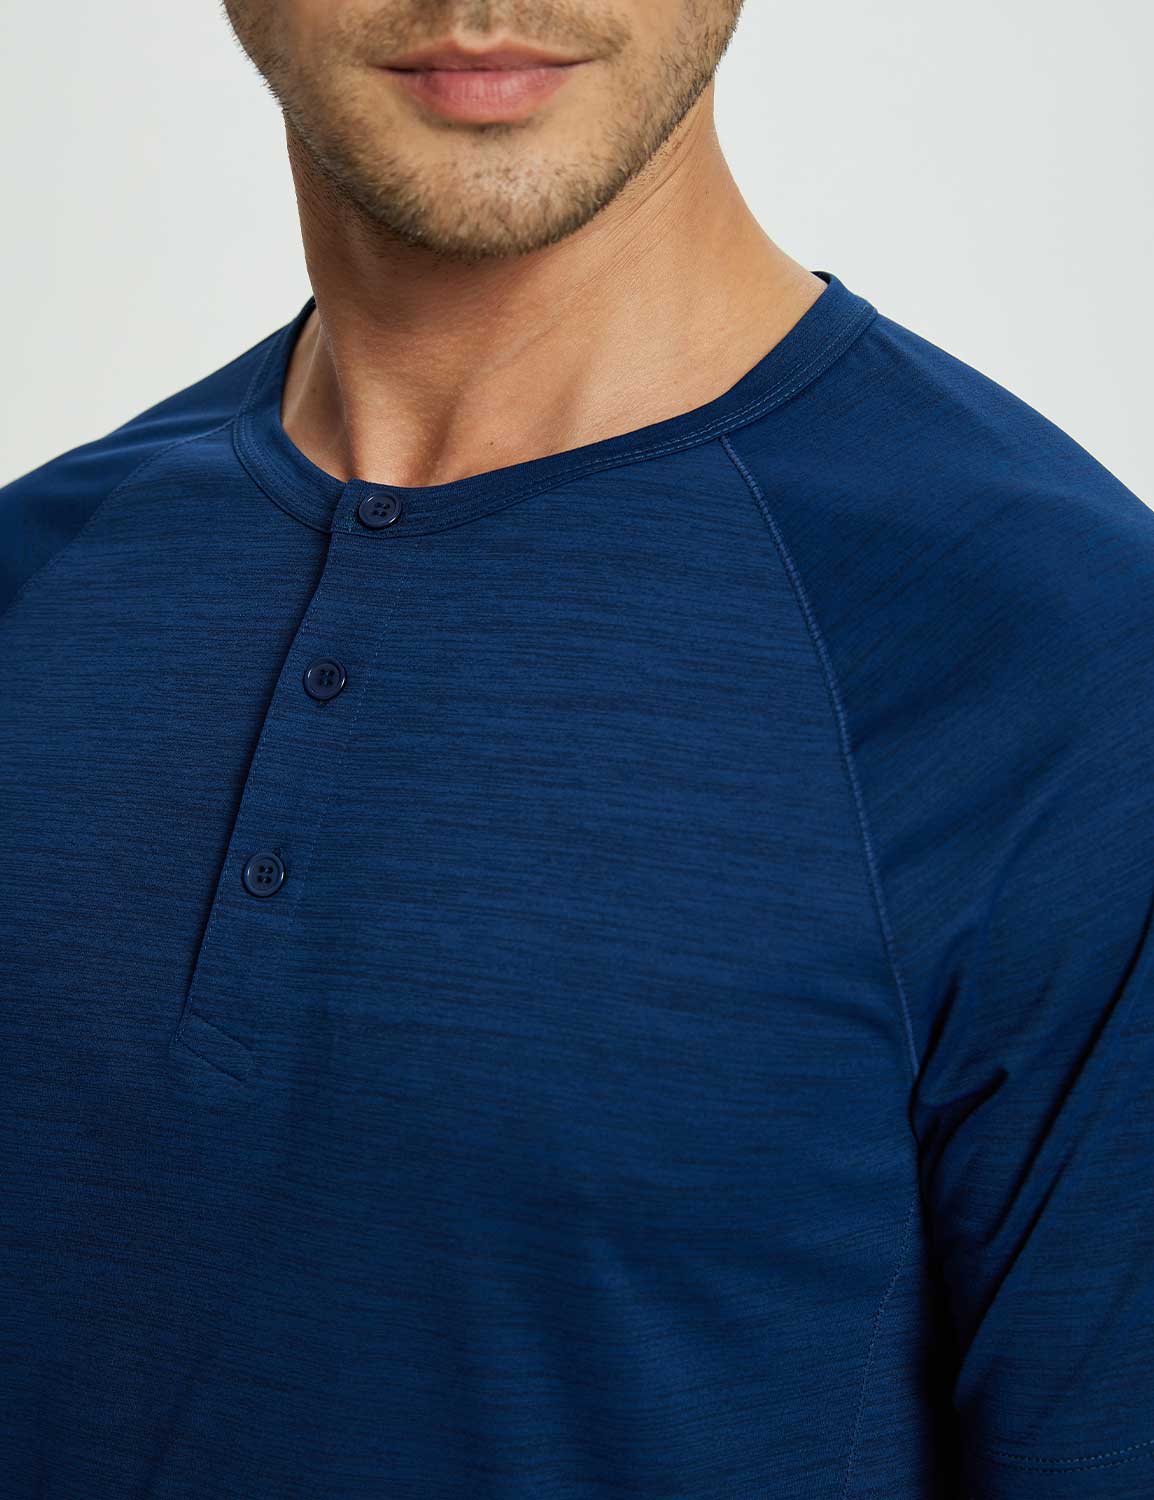 Baleaf Men's Short-Sleeve Henley T-Shirt (Website Exclusive) dbd067 Navy Peony Details